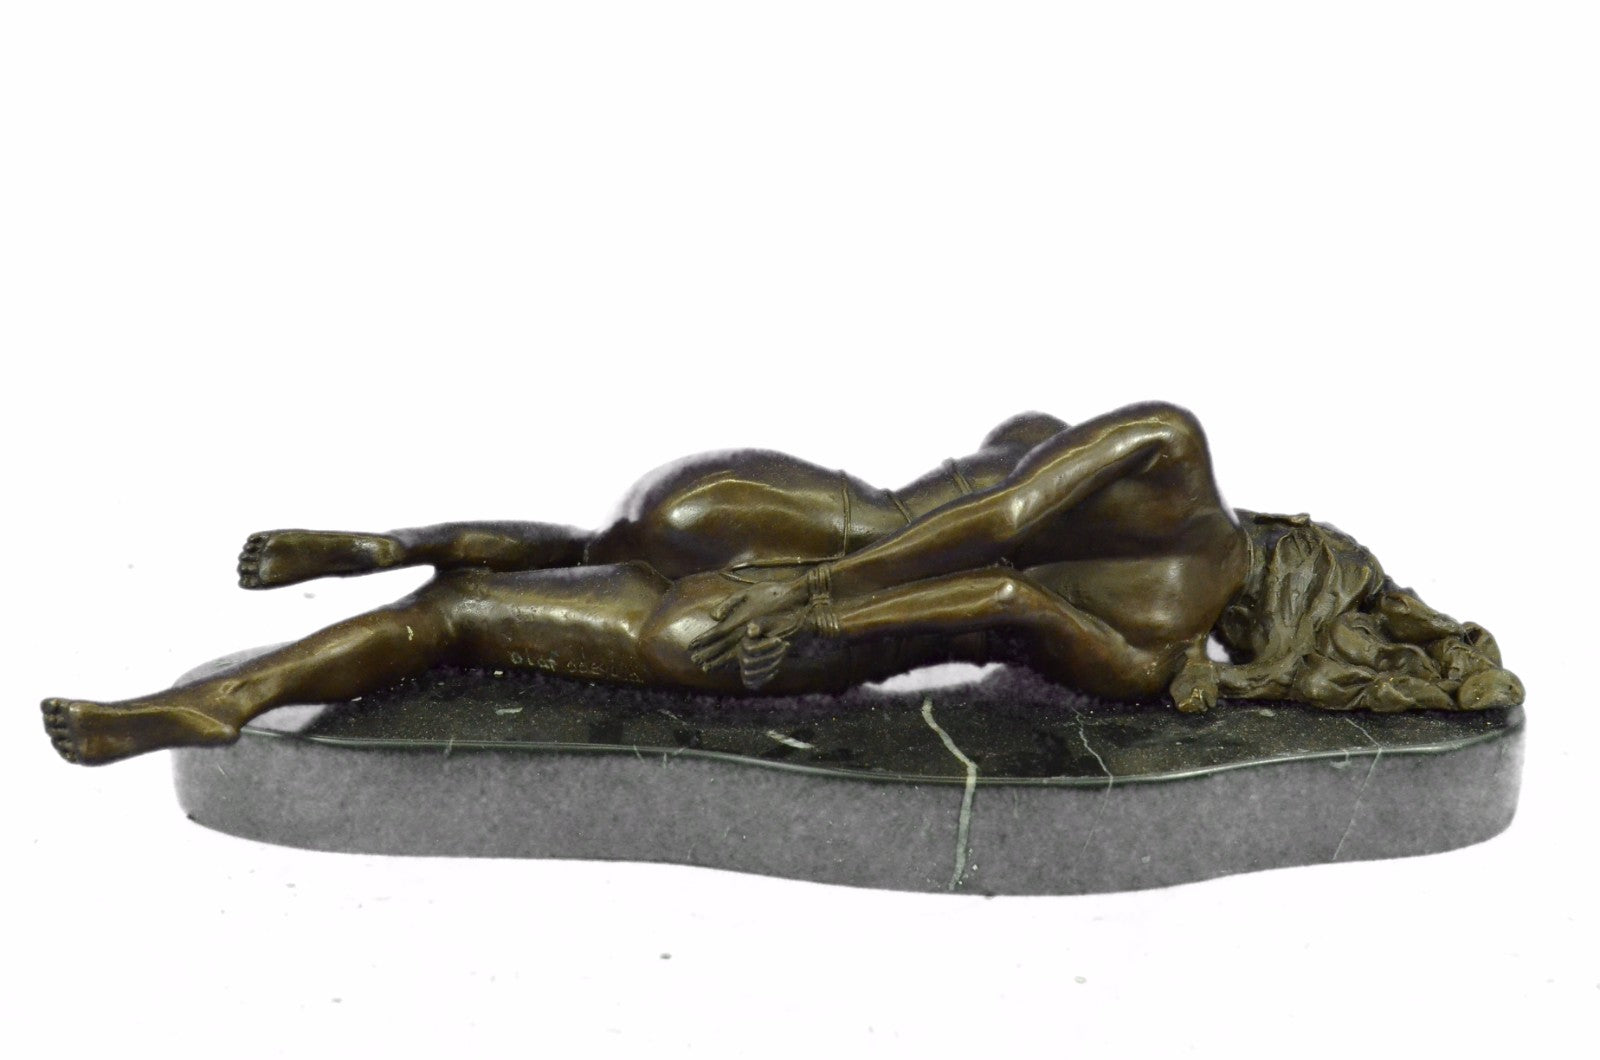 Handcrafted bronze sculpture SALE Bondage Game Wicked Cast Hot Original Signed